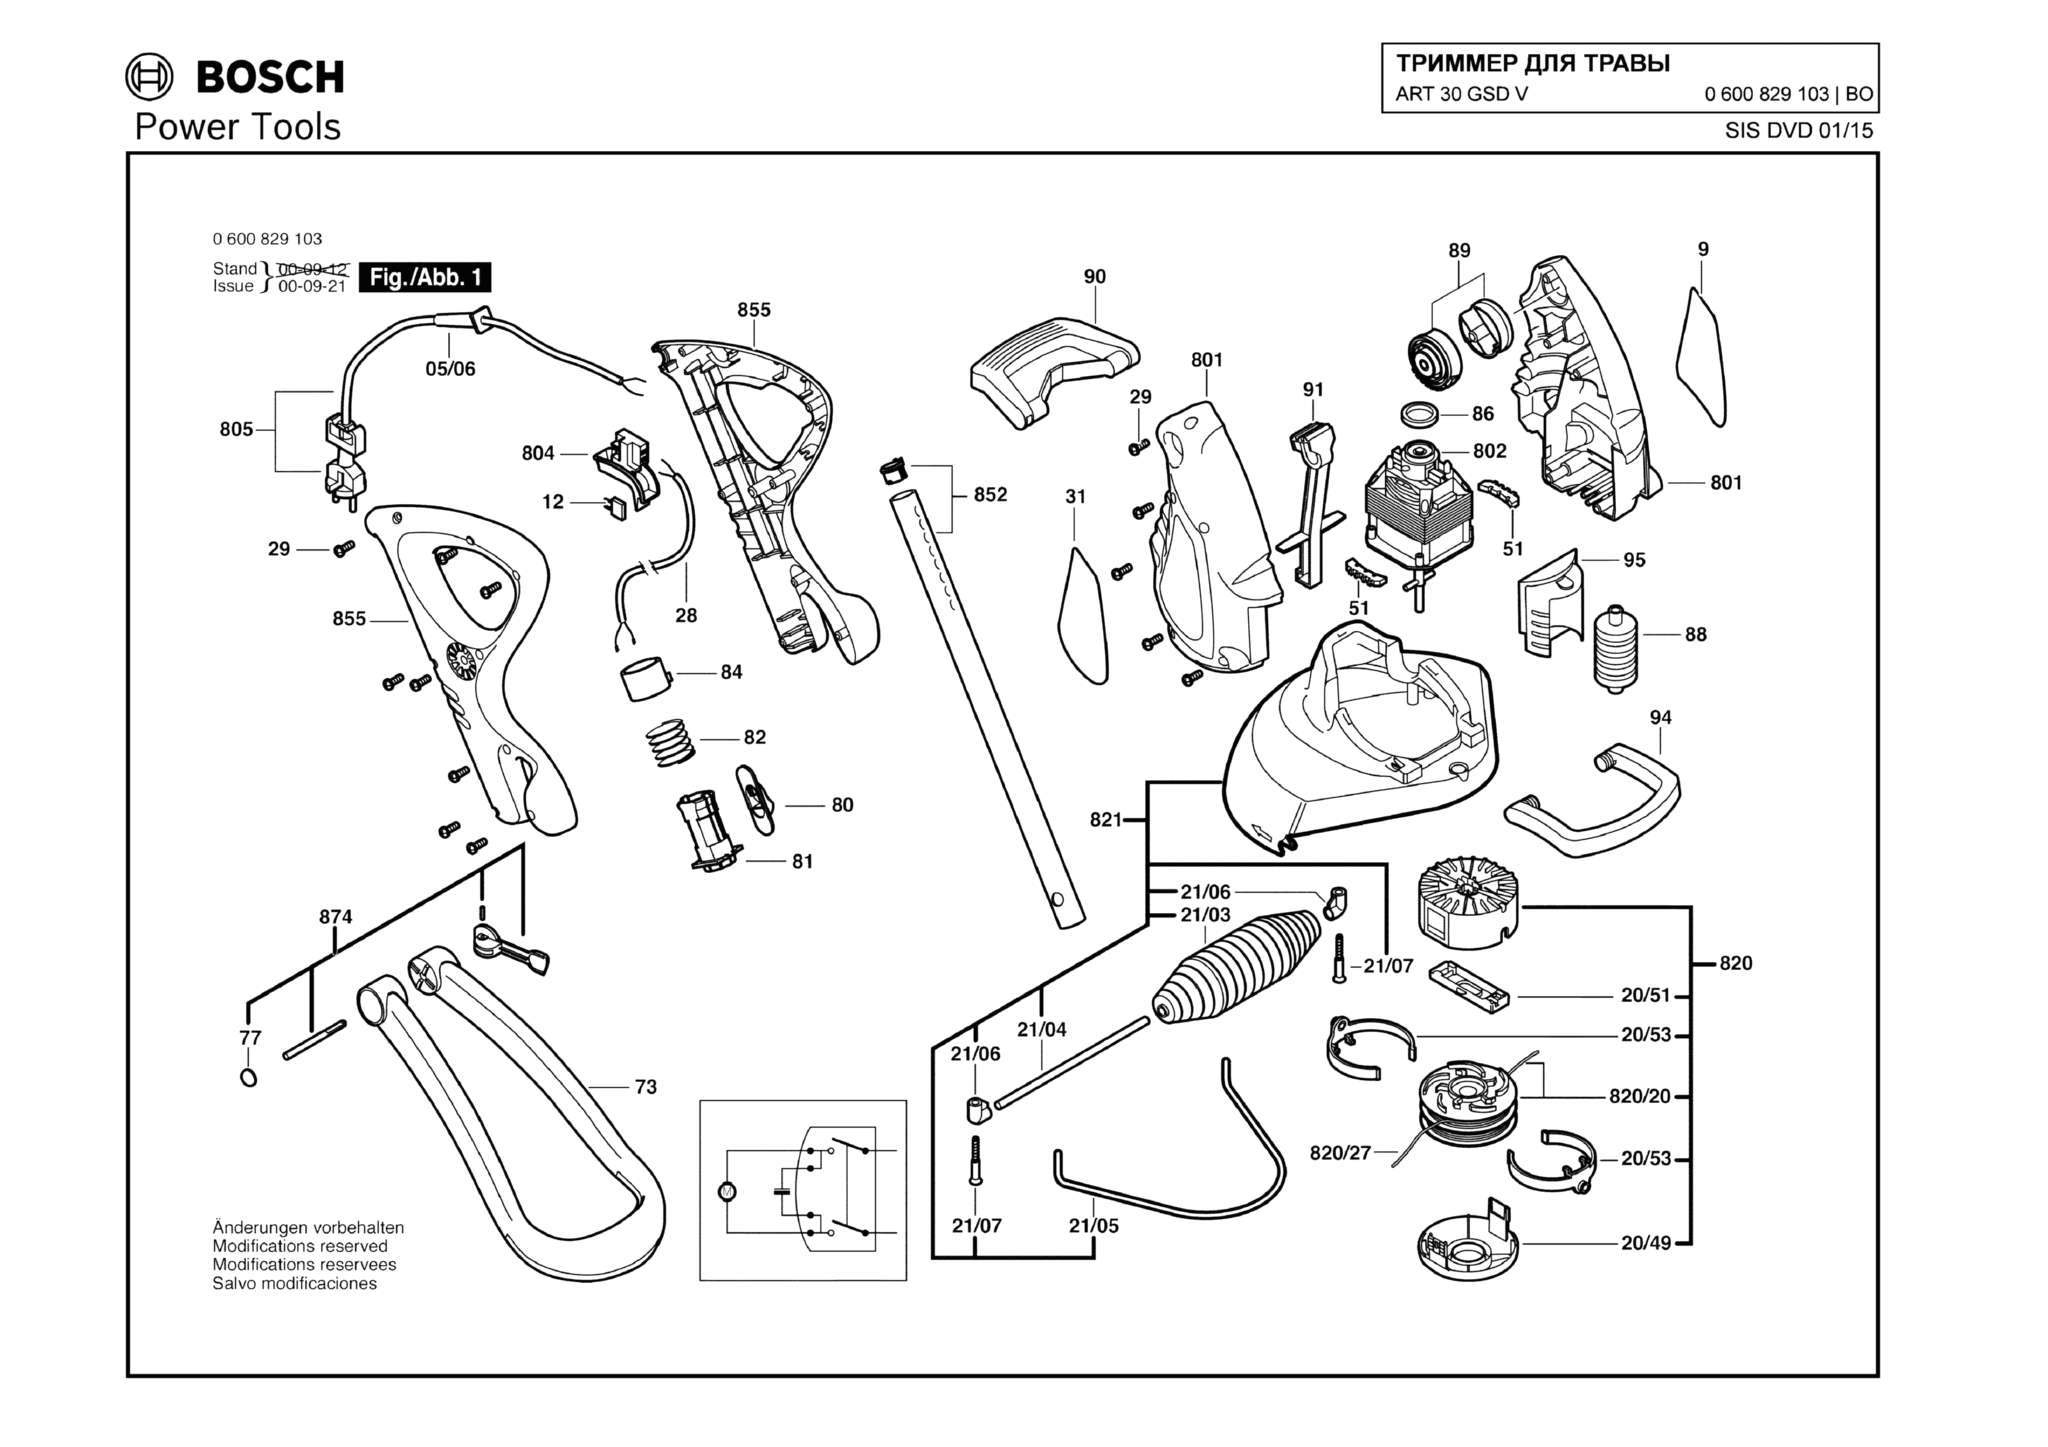 Запчасти, схема и деталировка Bosch ART 30 GSD V (ТИП 0600829103)